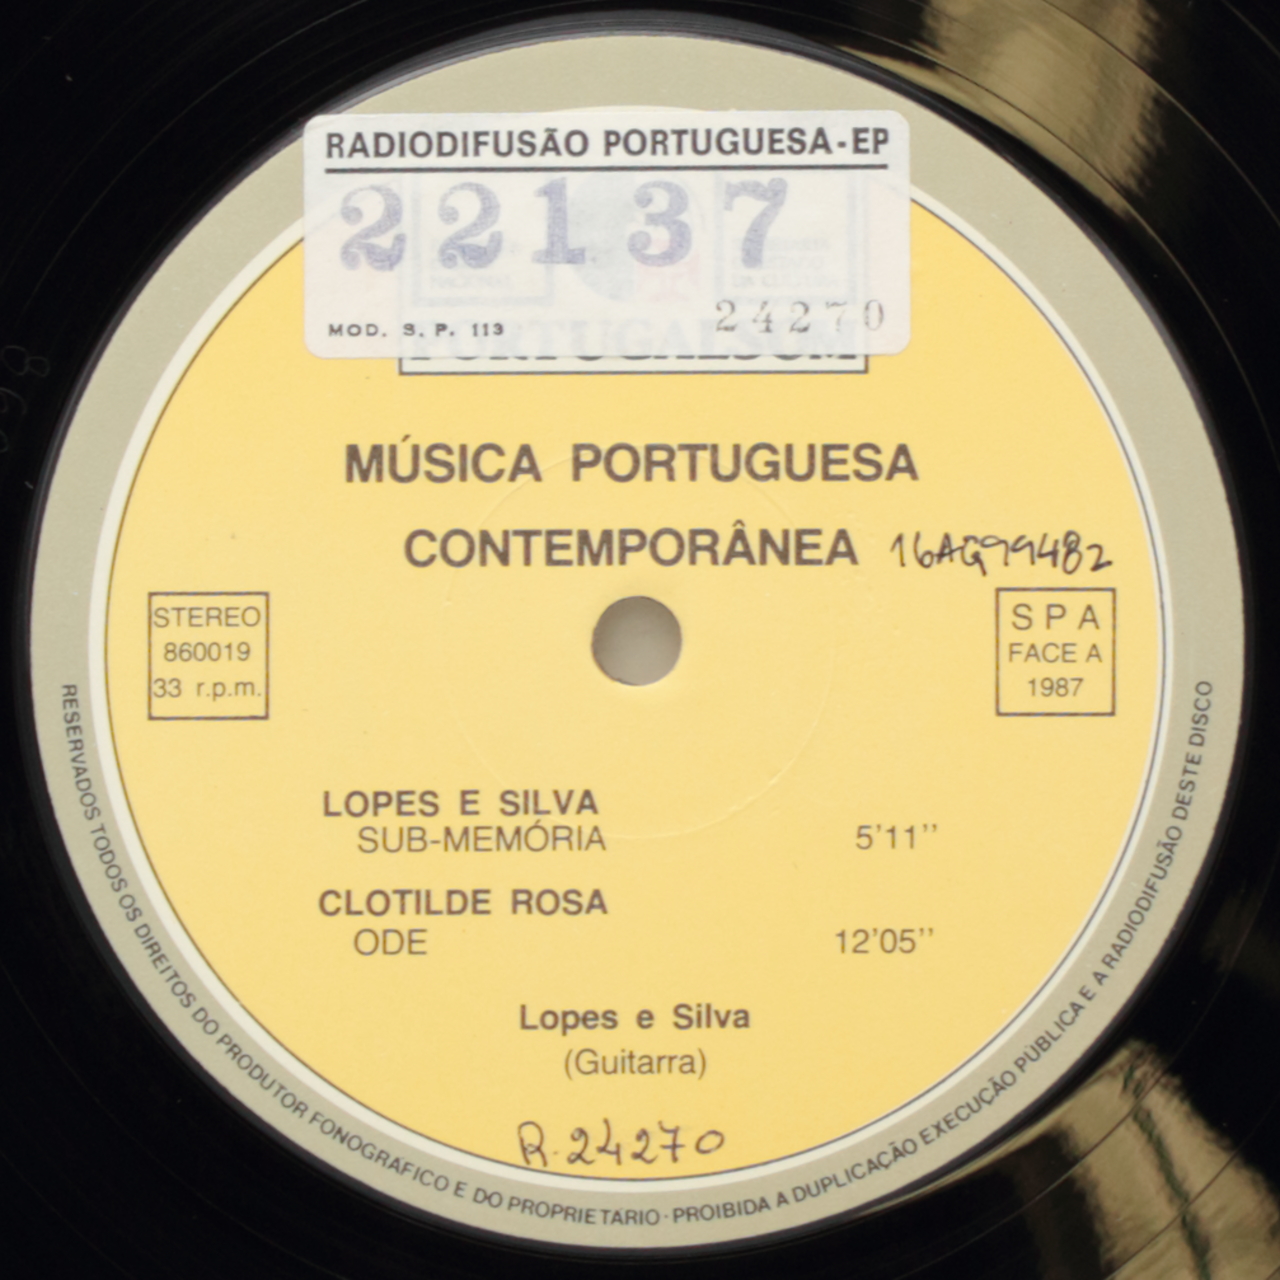 Música contemporânea portuguesa